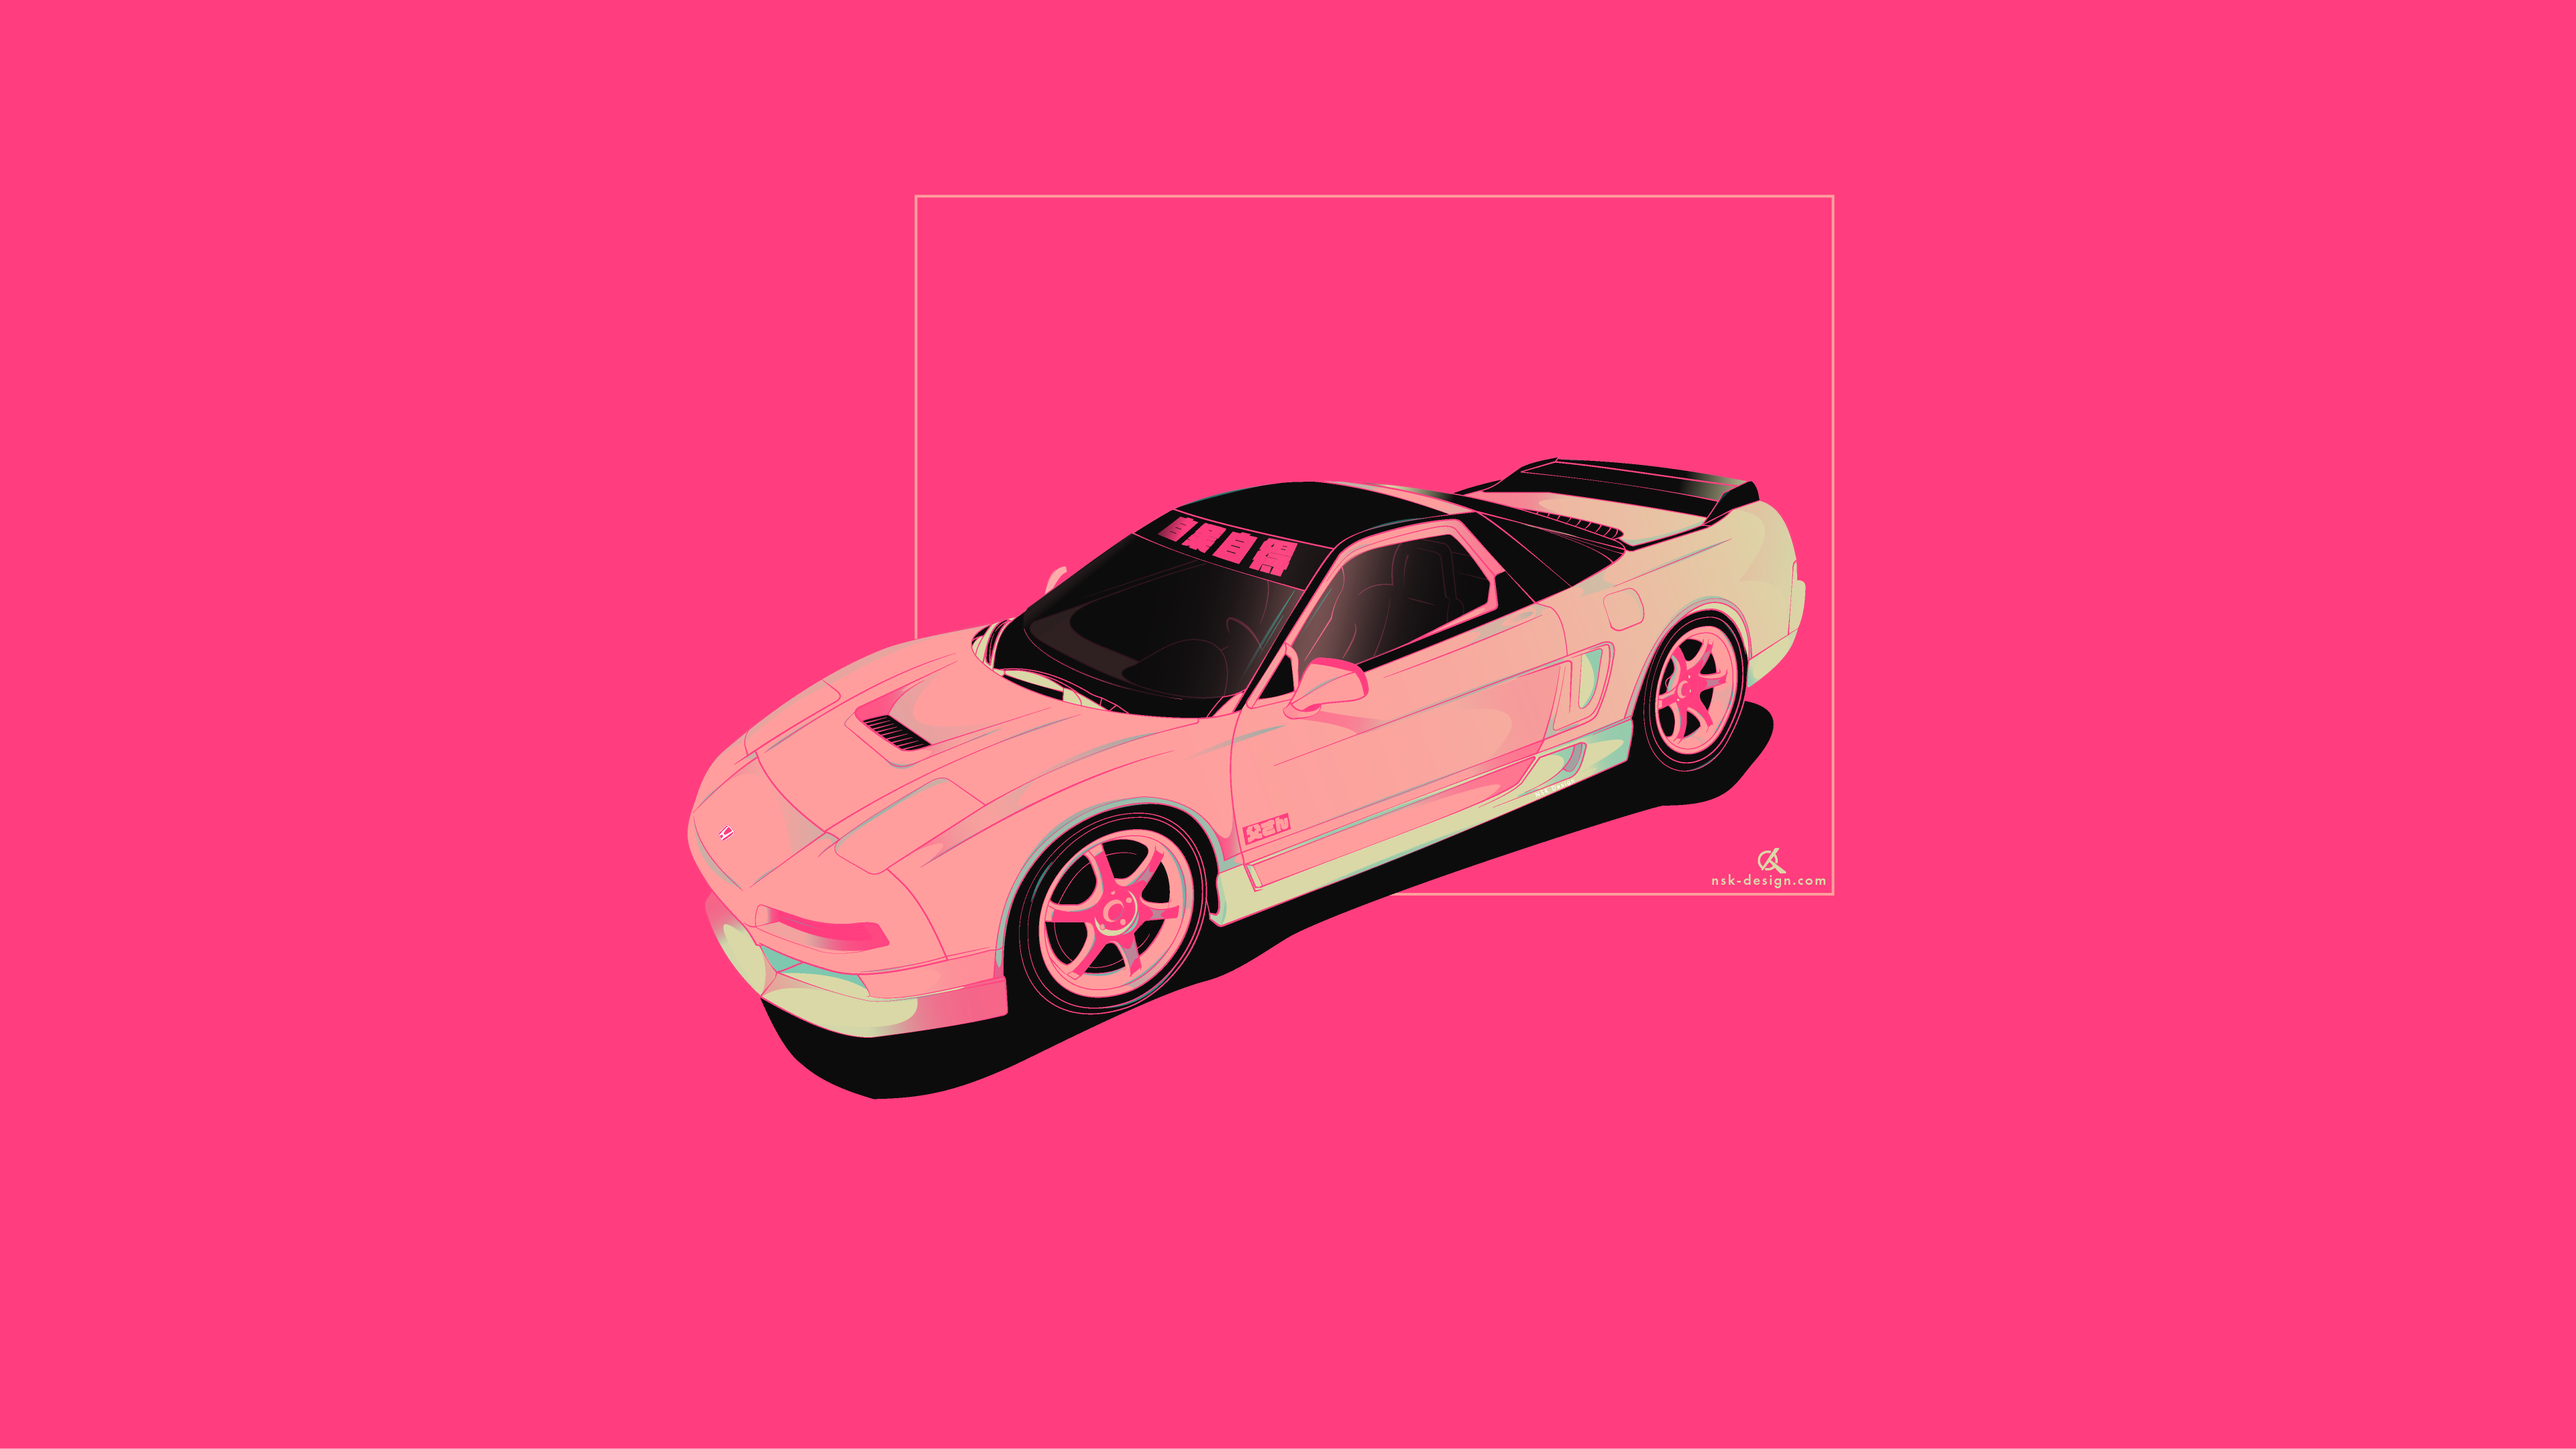 General 3840x2160 vector digital art minimalism car Japan pink pink background pop-up headlights